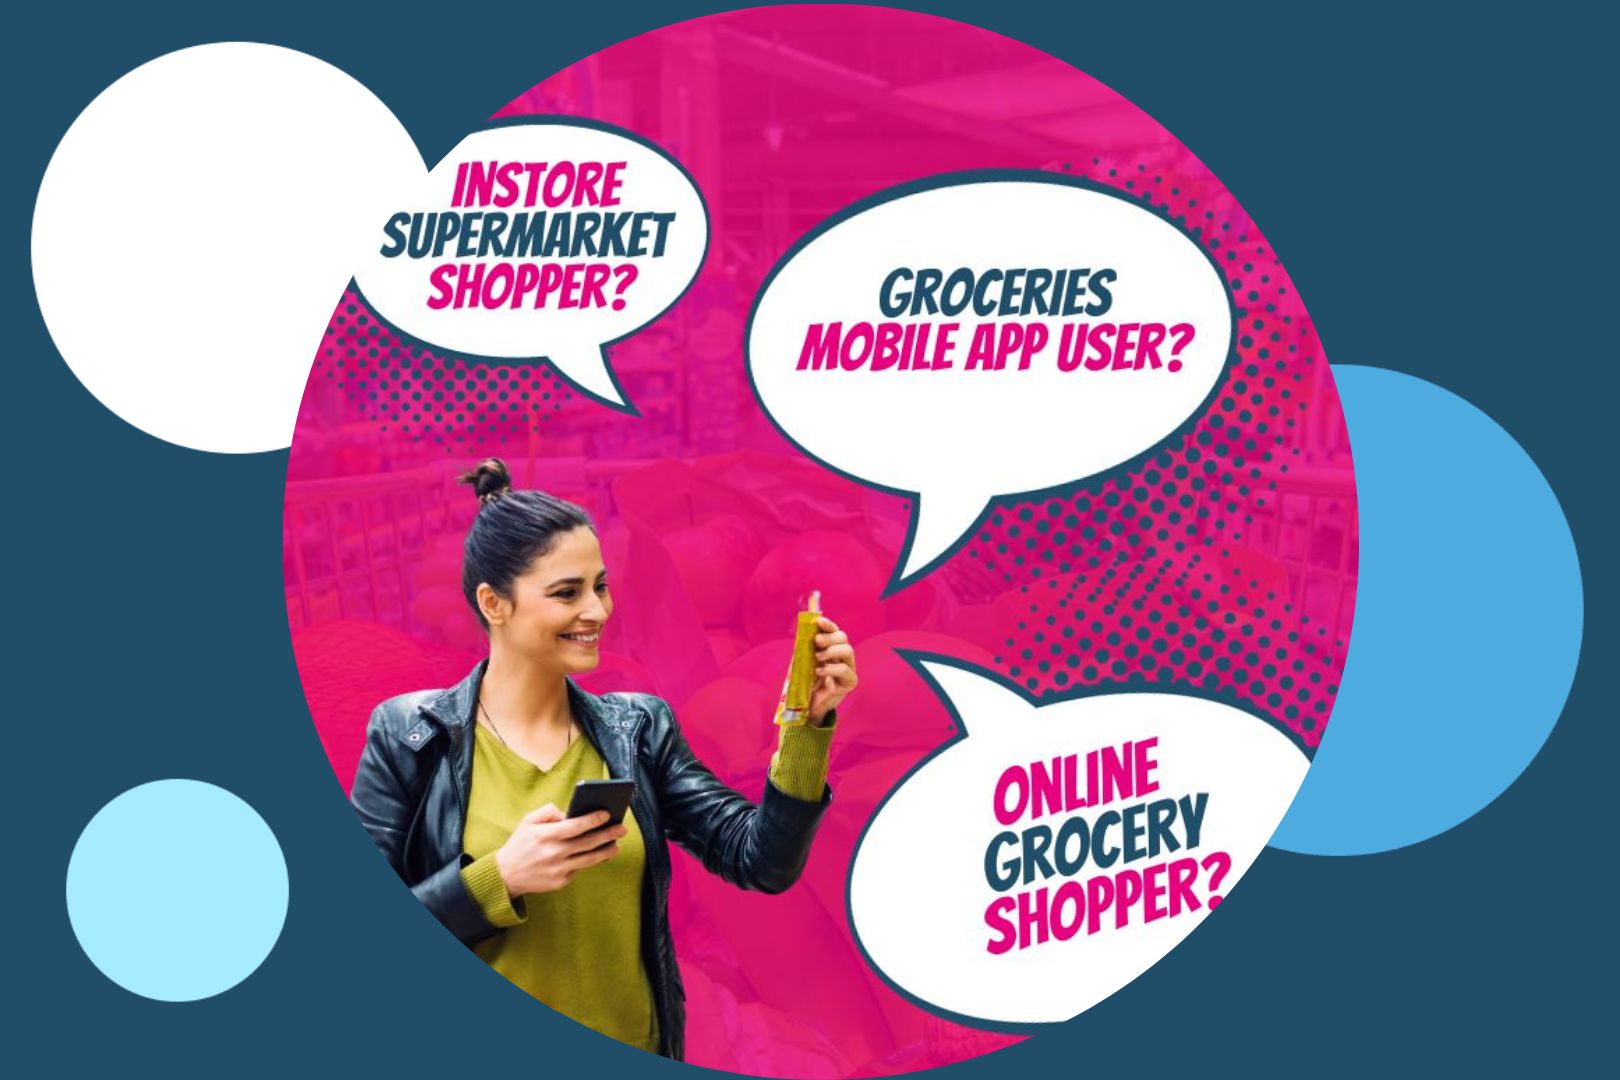 Supermarket shopper, , speak bubble text green and pink; Instore supermarket shopper? Groceries instore app user? Online grocery shopper? 